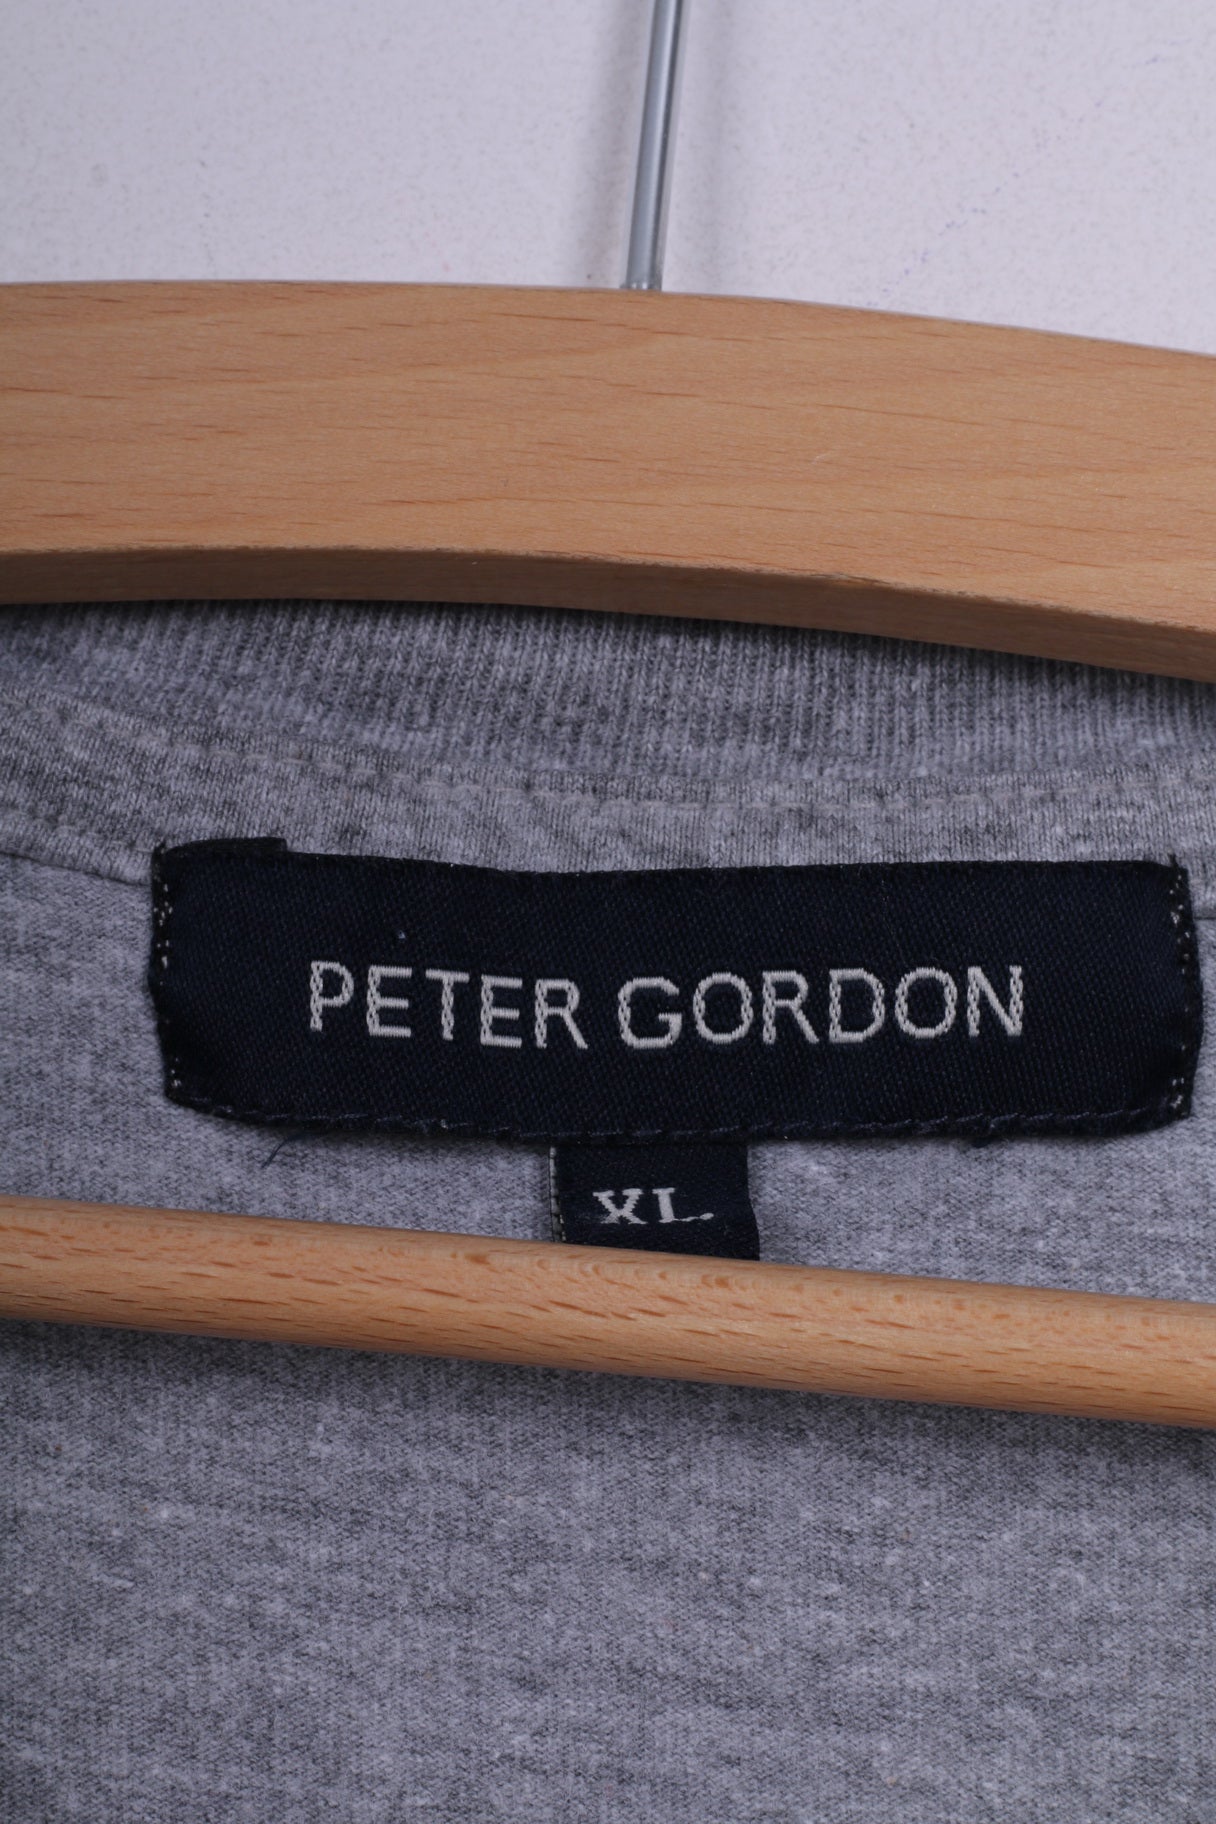 Peter Gordon Mens XL(L)Graphic Shirt Long Sleeve Grey Cotton Crew Neck Club Los Amigos